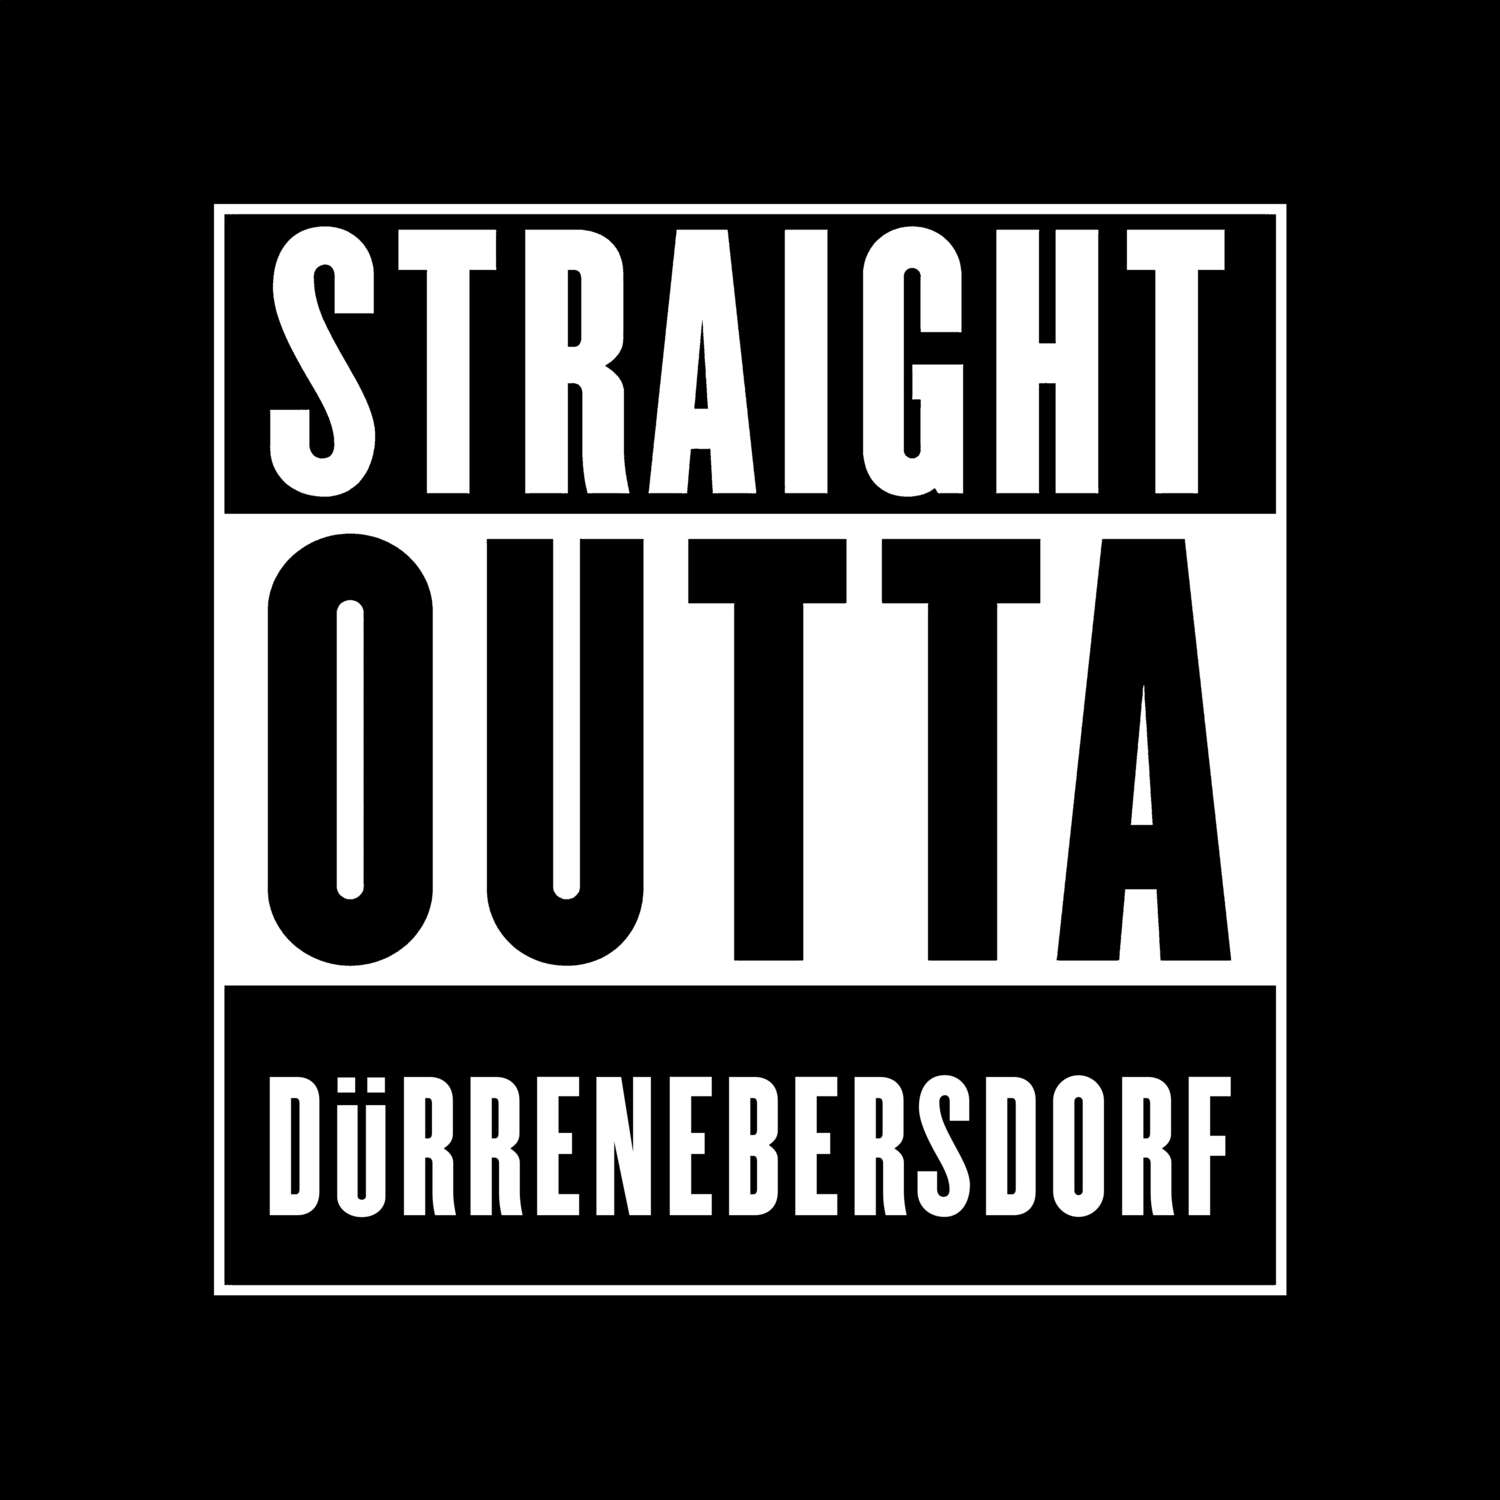 Dürrenebersdorf T-Shirt »Straight Outta«